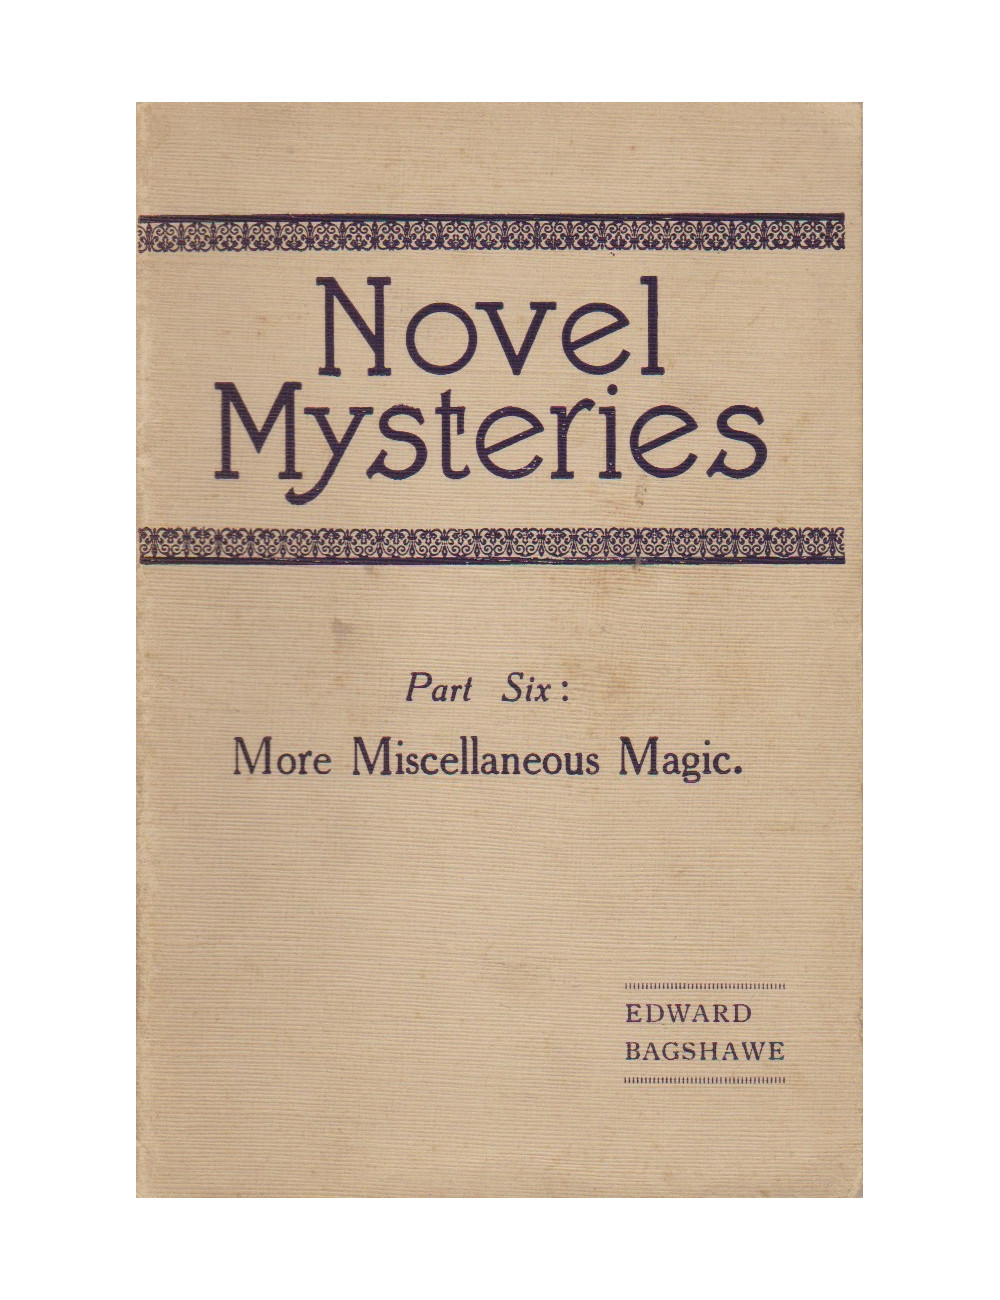 NOVEL MYSTERIES Part Six : More Miscellaneous Magic (EDWARD BAGSHAWE)